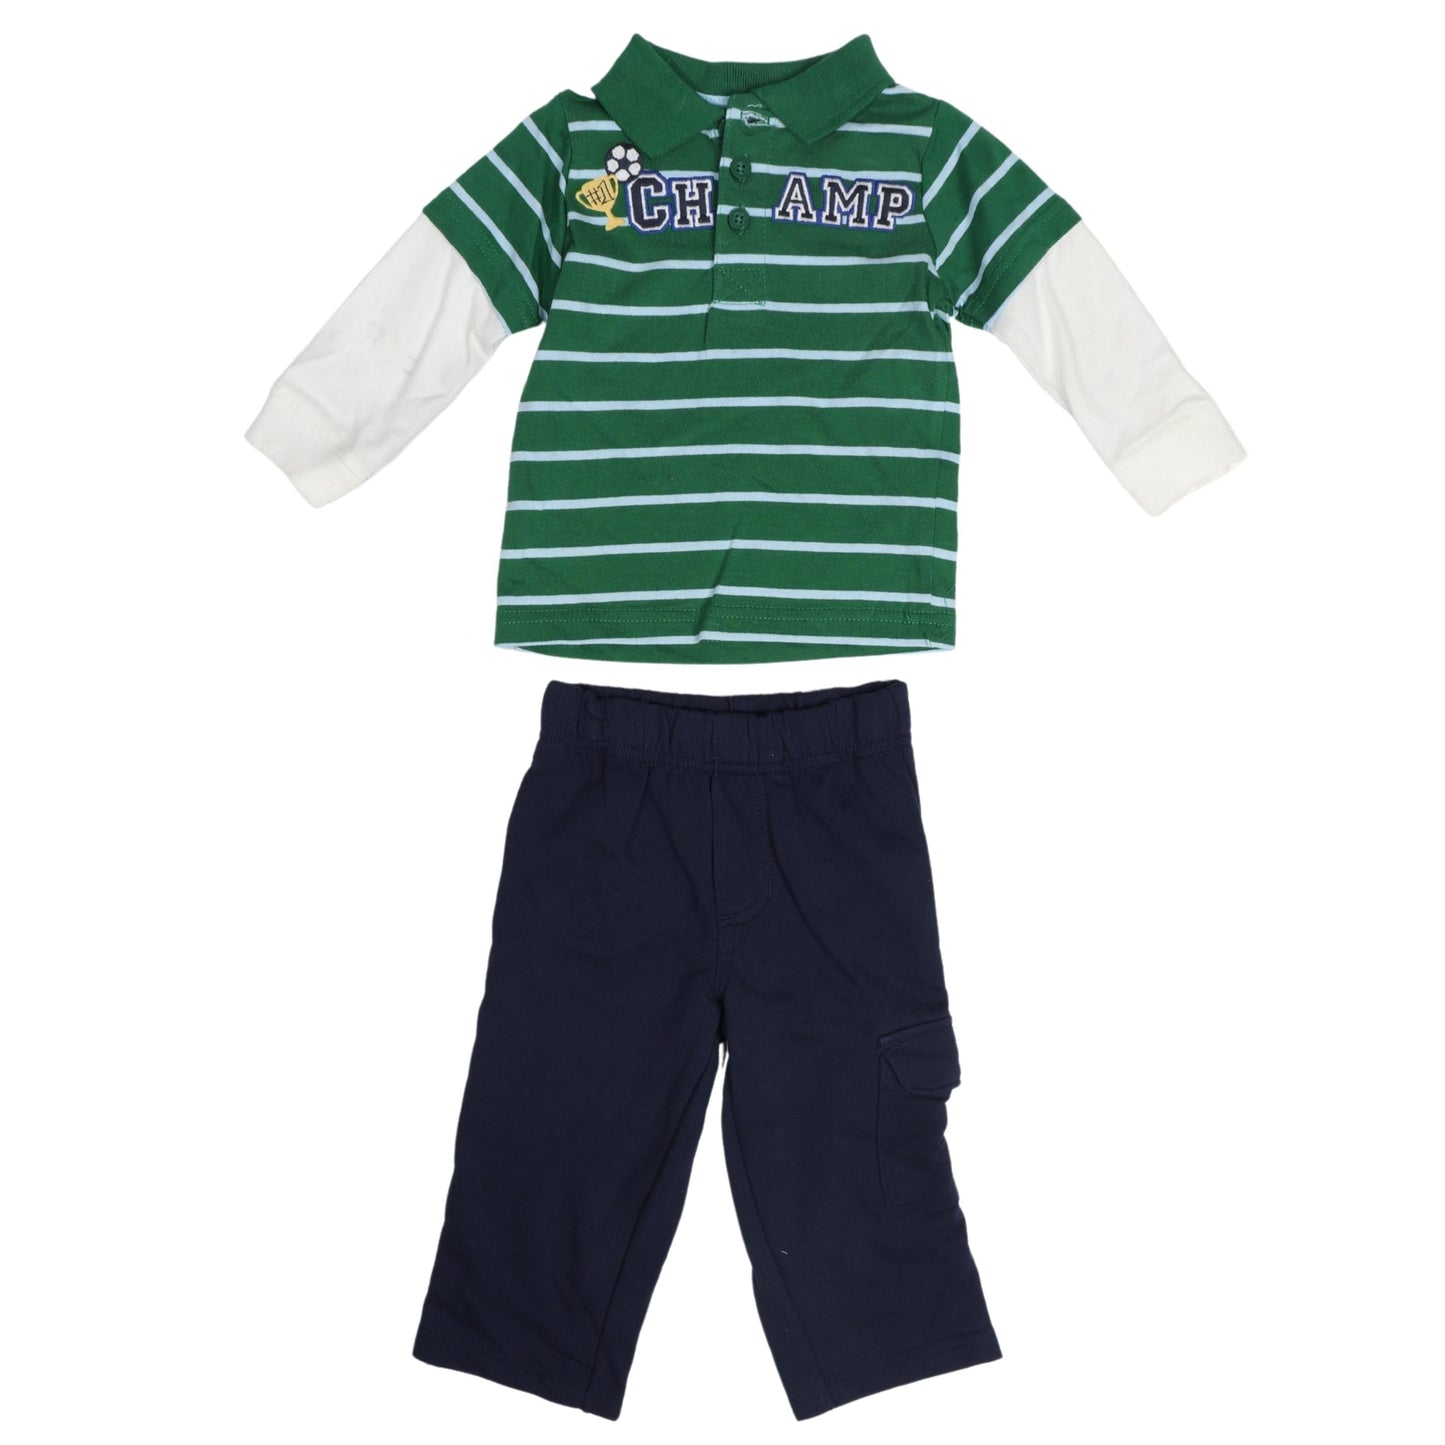 CARTER'S Baby Boy 9 Month / Green CARTER'S - Casual Pajama Set